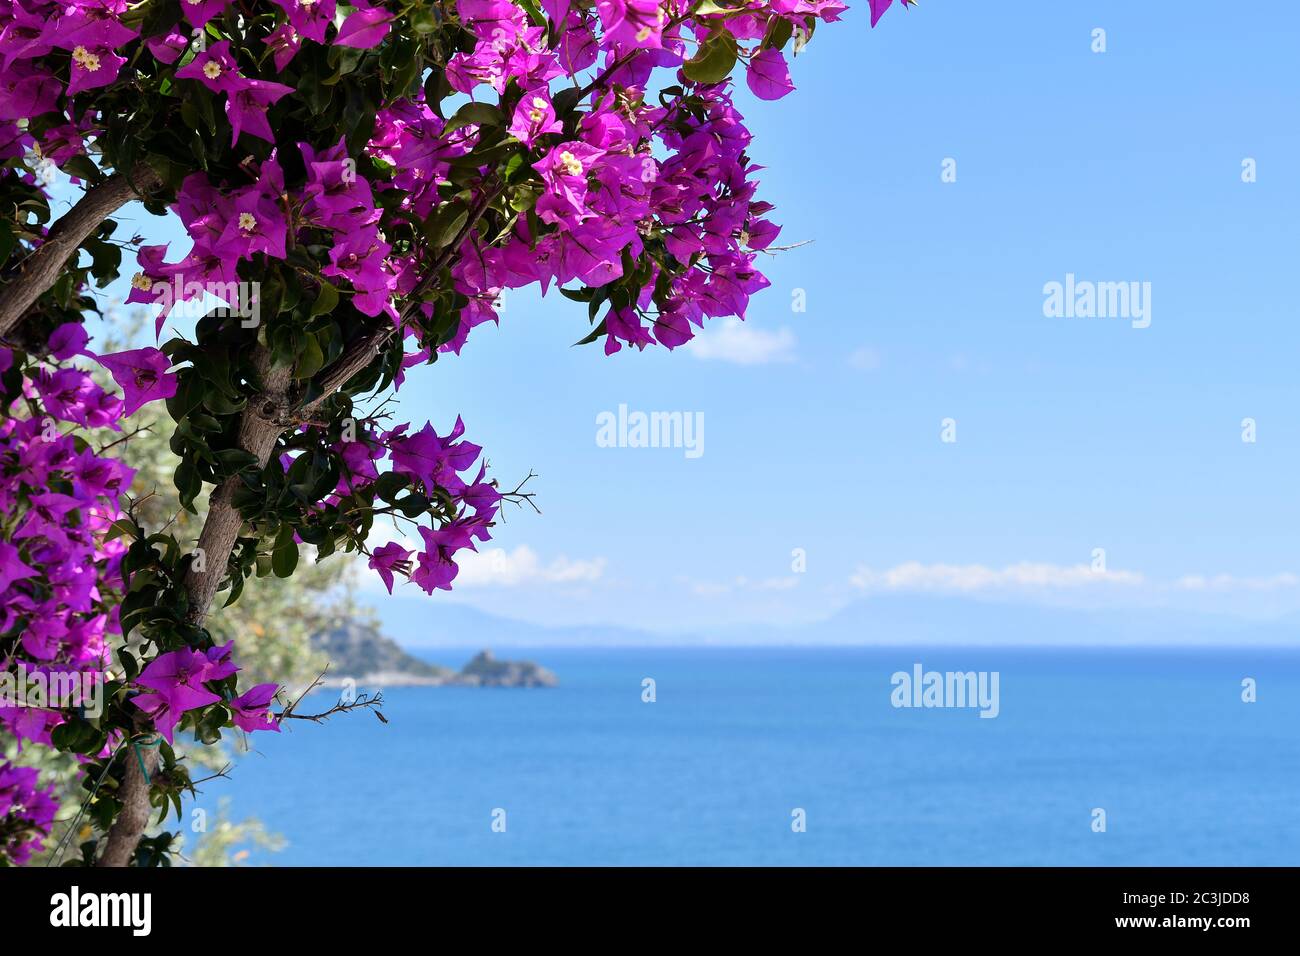 Flowers, Positano, Amalfi Coast, Italy Stock Photo - Alamy